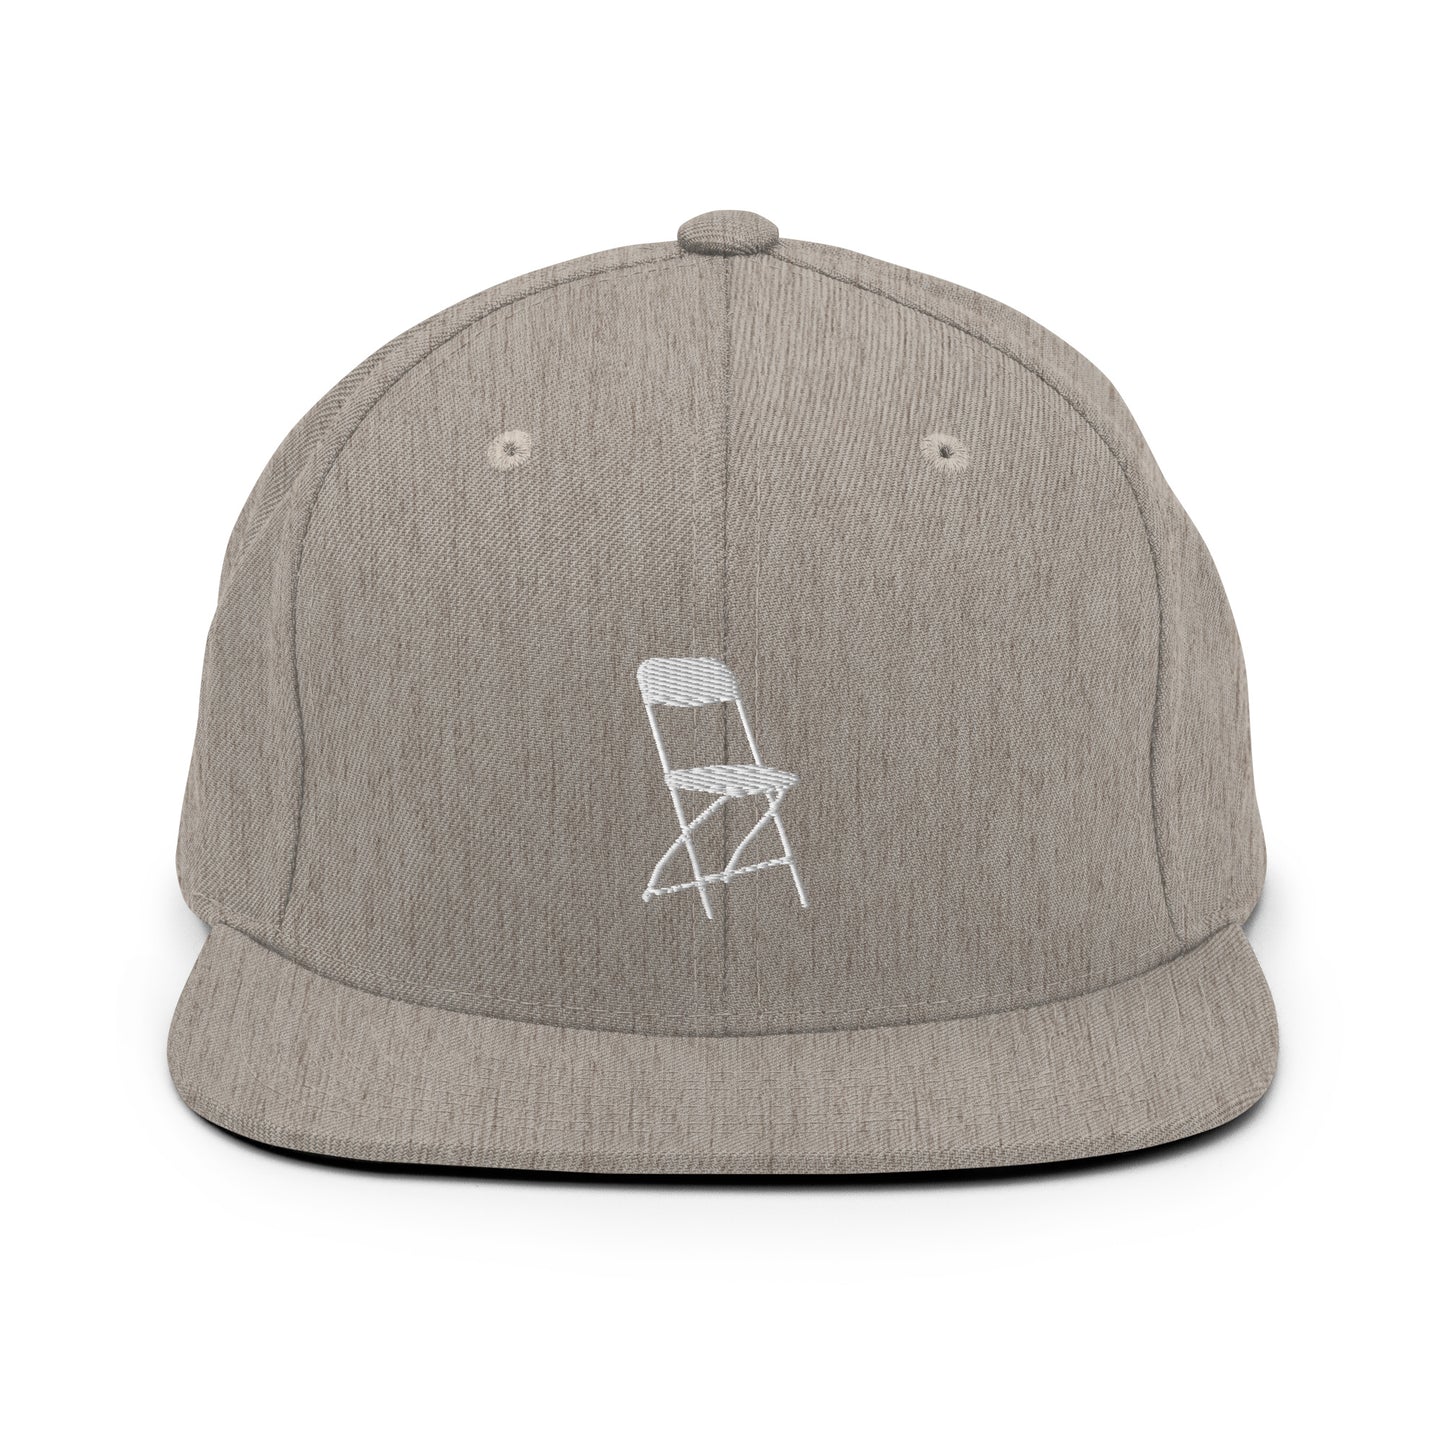 Folding Chair Snapback Hat